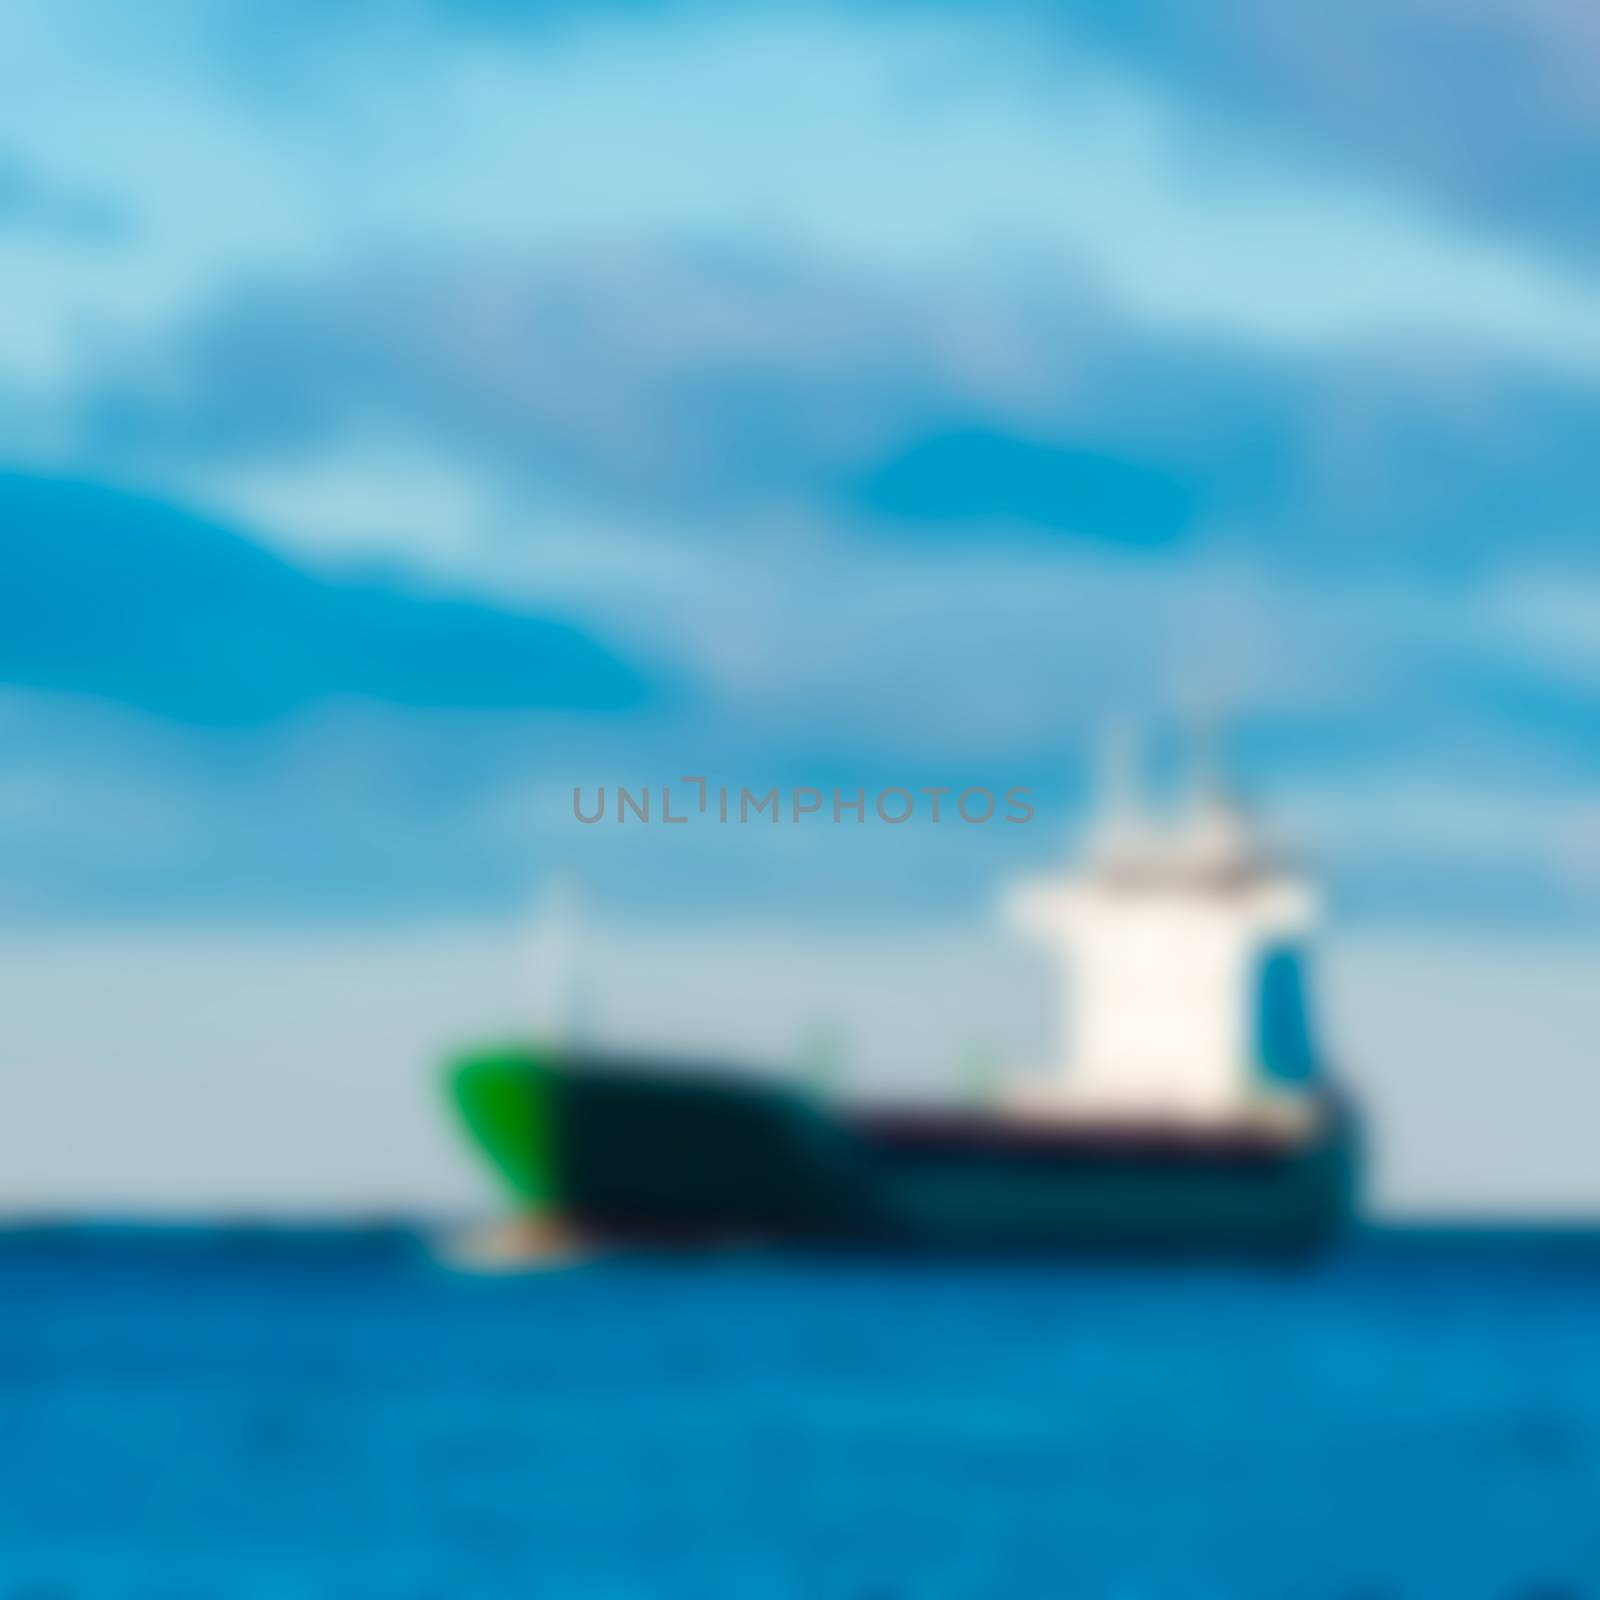 Cargo ship - blurred image by sengnsp